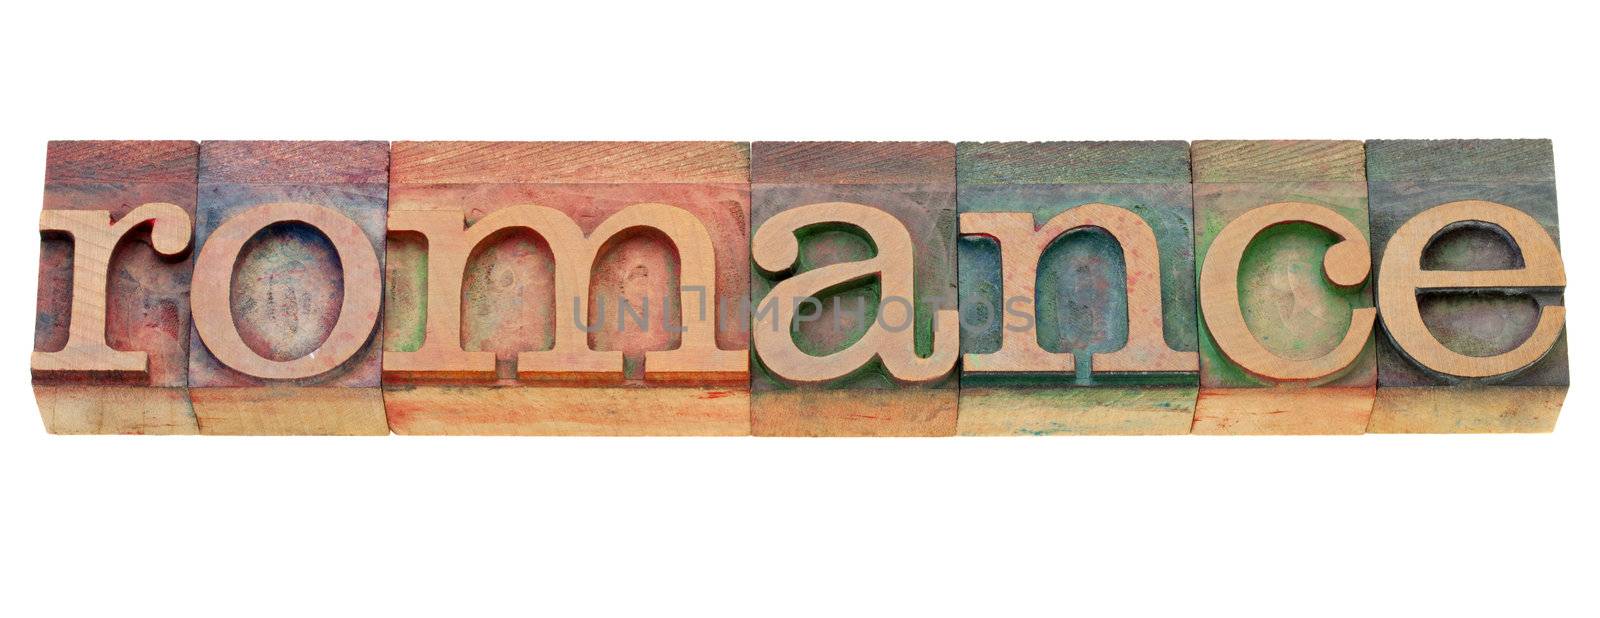 romance - isolated word in vintage wood letterpress printing blocks